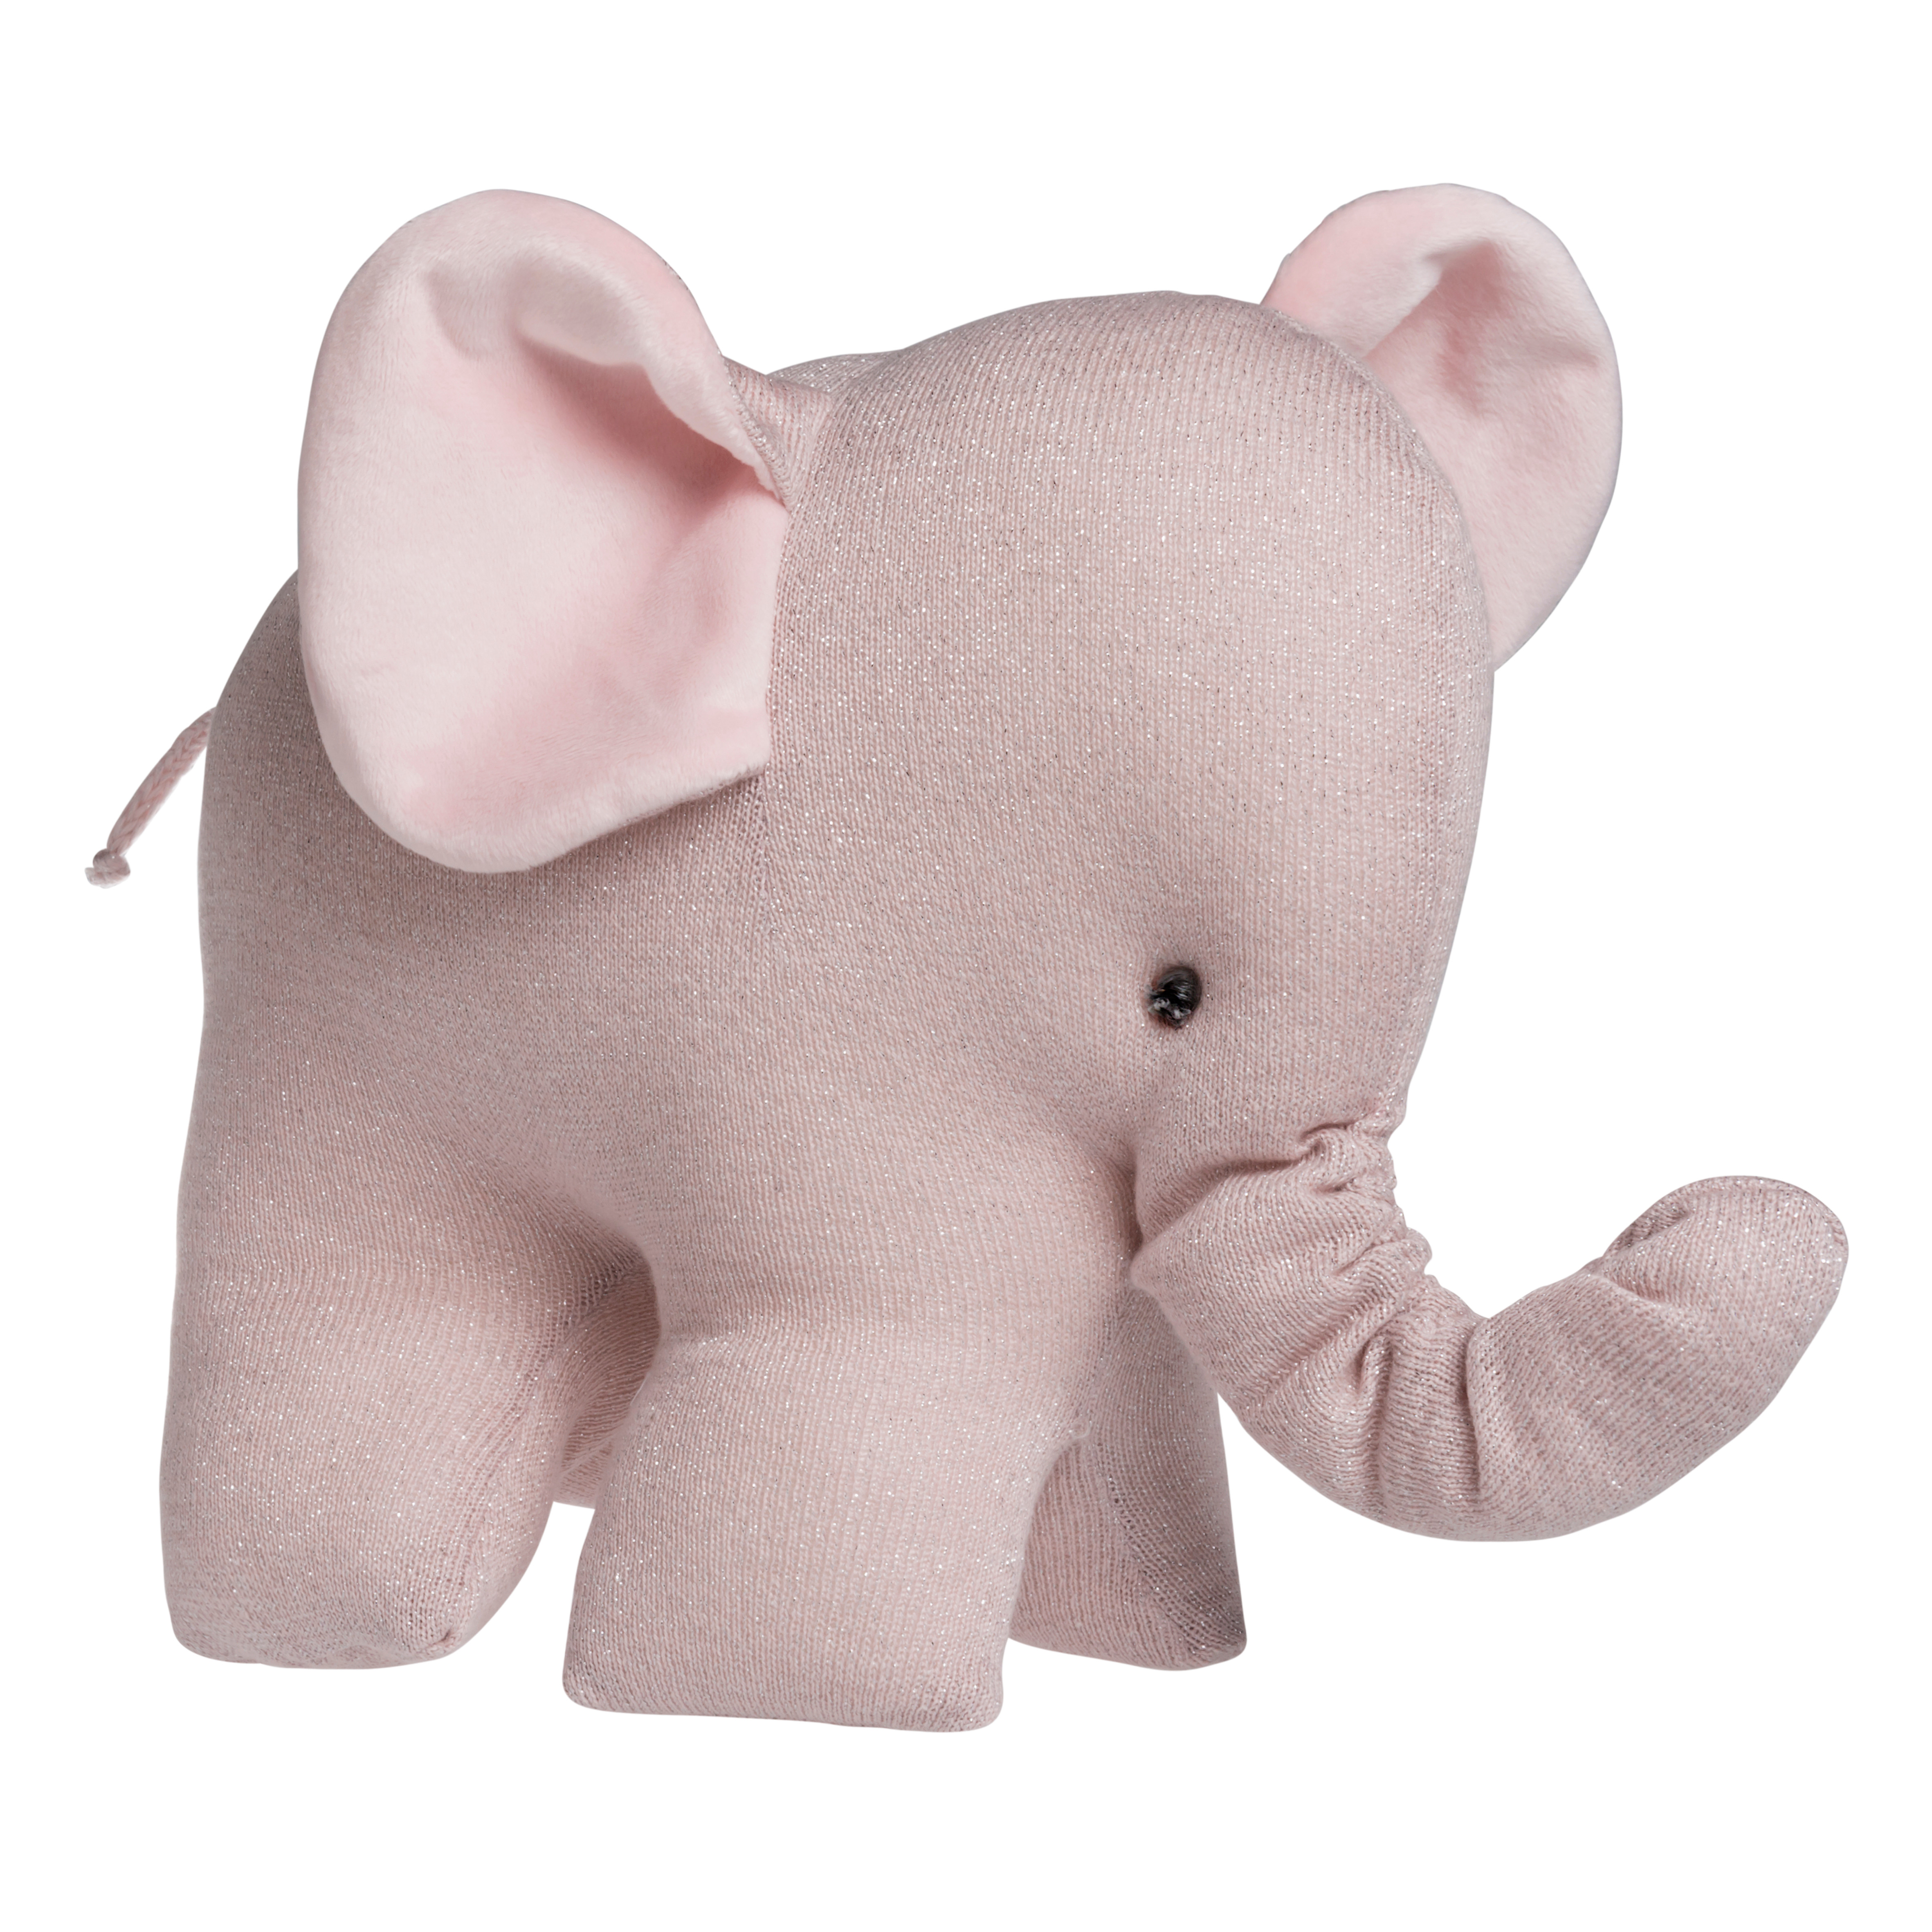 Stuffed elephant Sparkle silver-pink melee